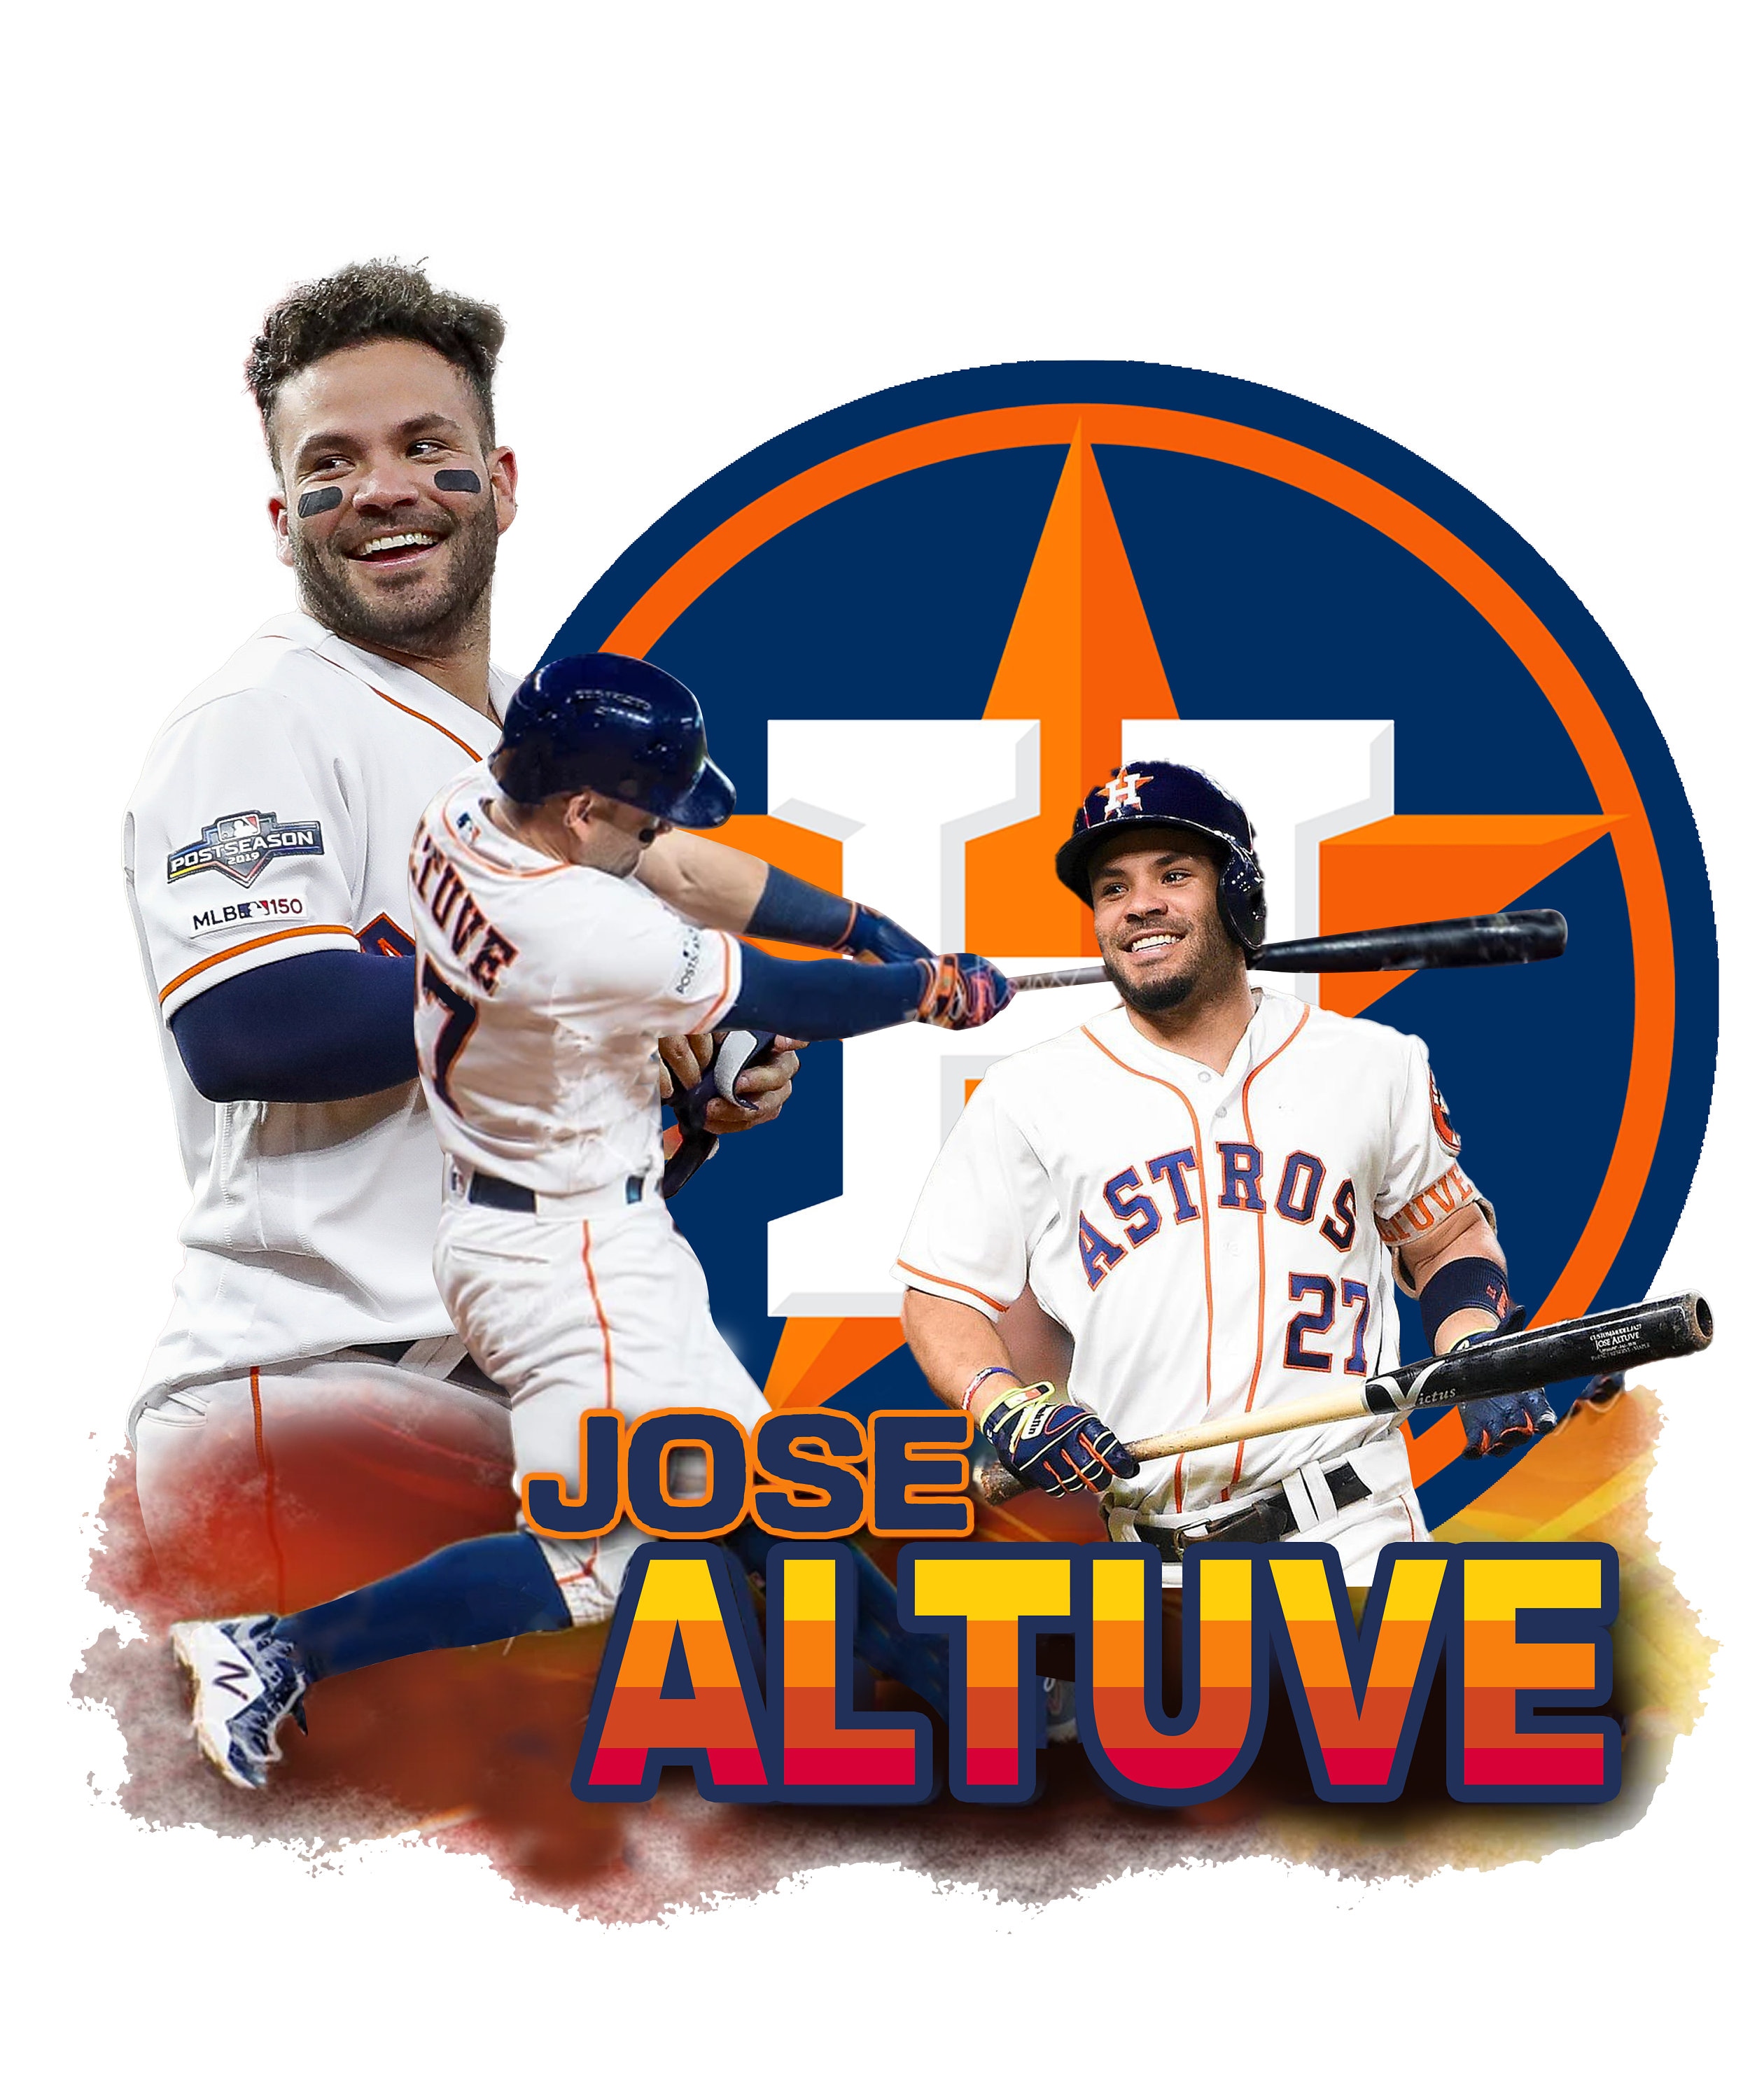 Jose Altuve, grunge art, MLB, Houston Astros, baseman, baseball